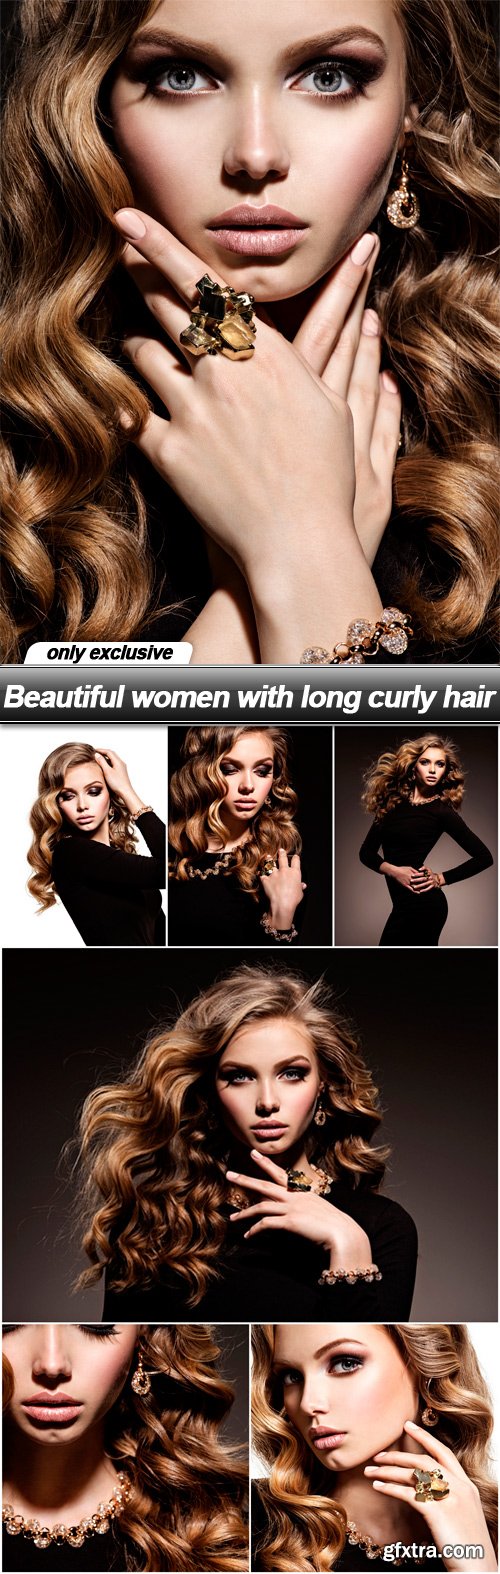 Beautiful women with long curly hair - 7 UHQ JPEG